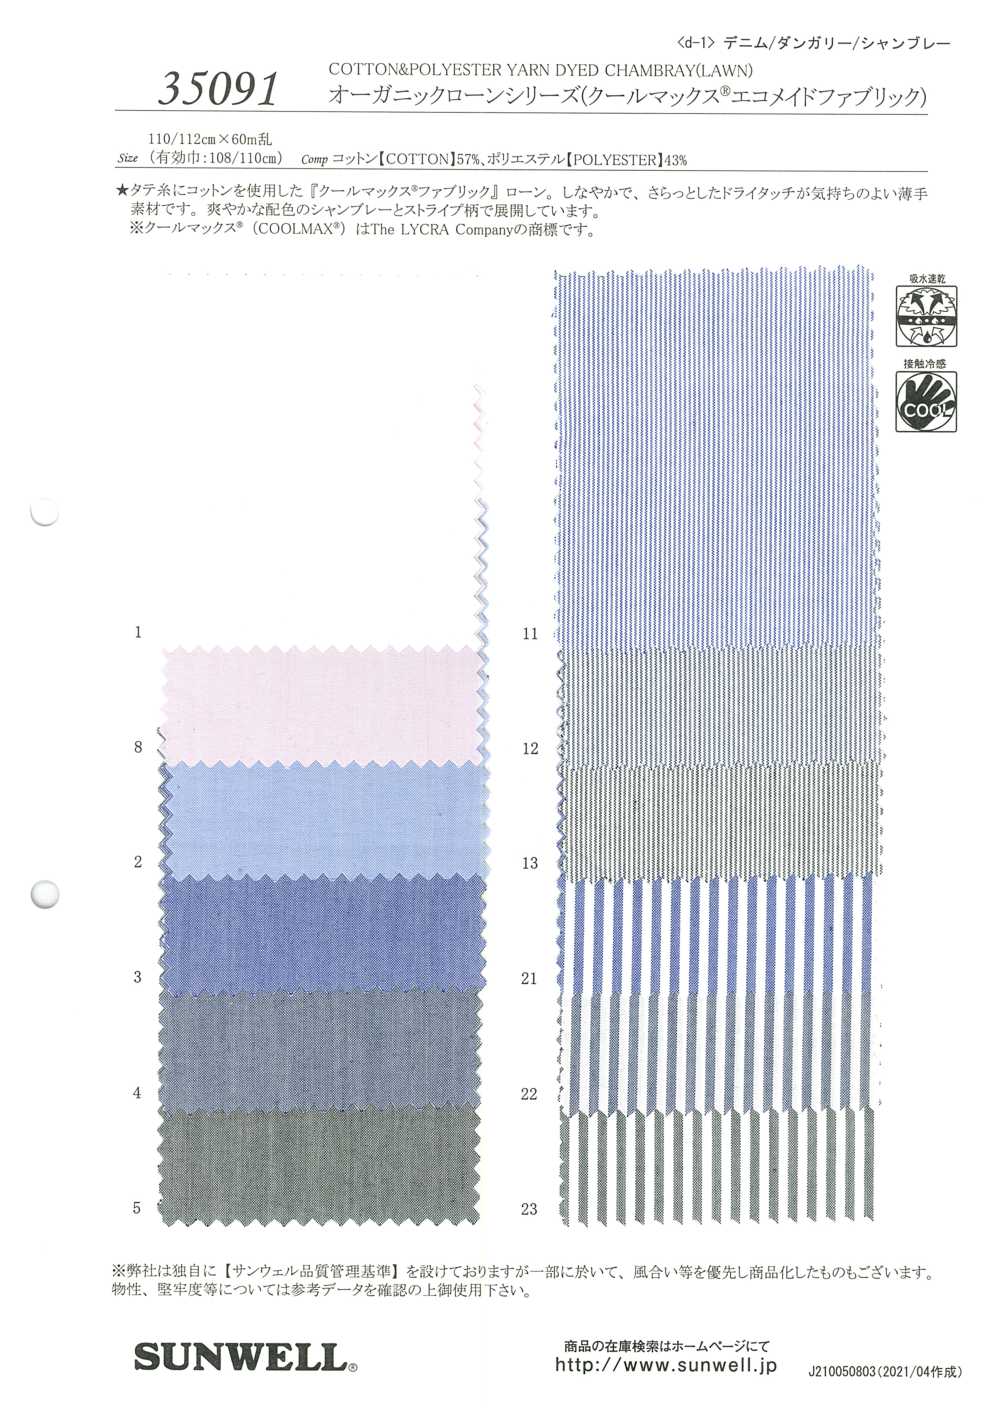 35091 Organic Lawn Series (Coolmax (R) Eco-made Fabric)[Textile / Fabric] SUNWELL